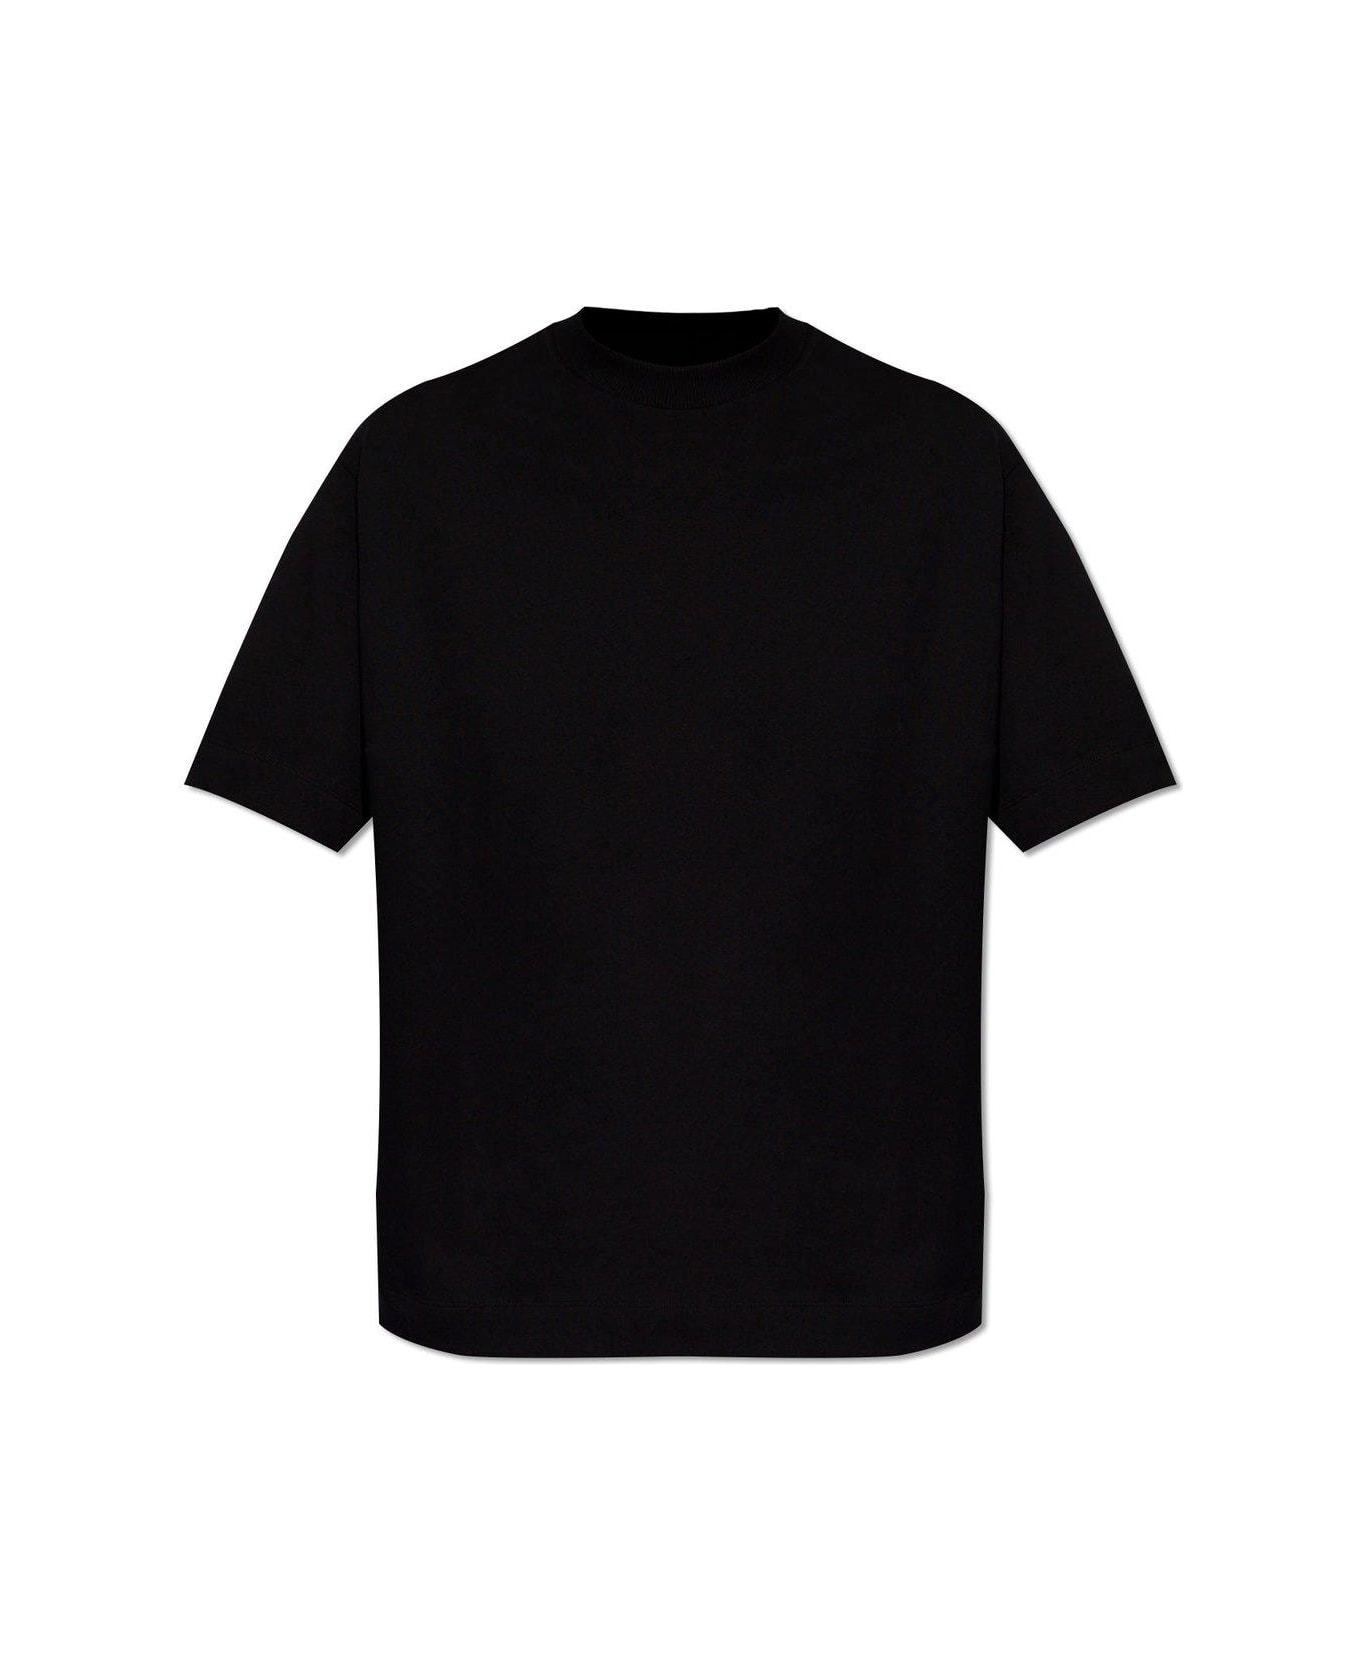 Emporio Armani T-shirt With Logo - Black